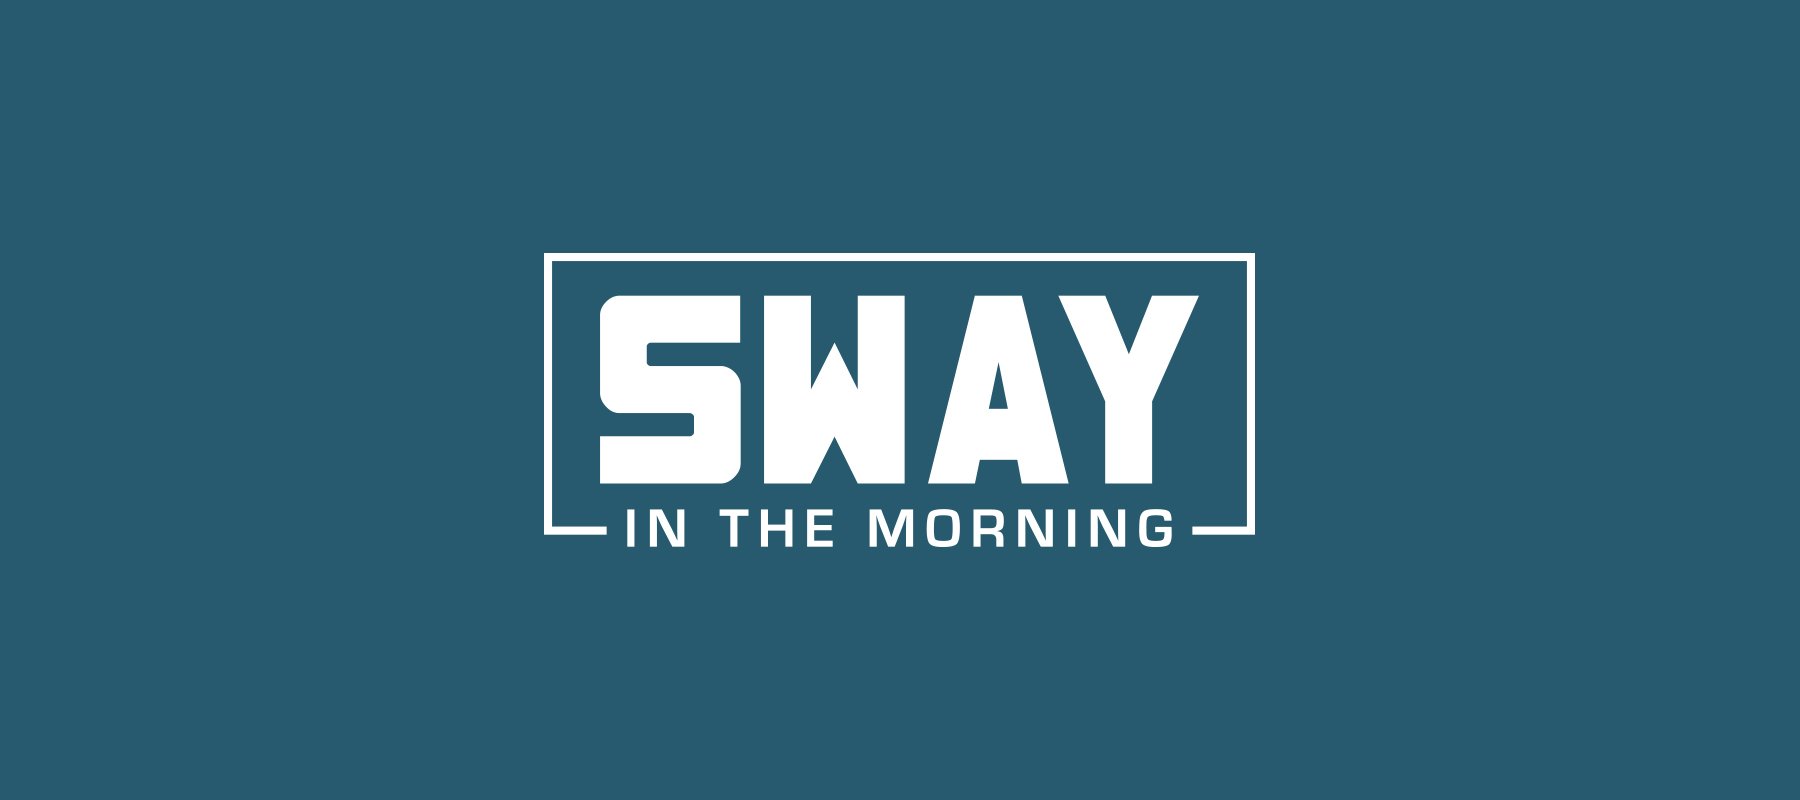 sways-in-the-morning-logo-copy.jpg